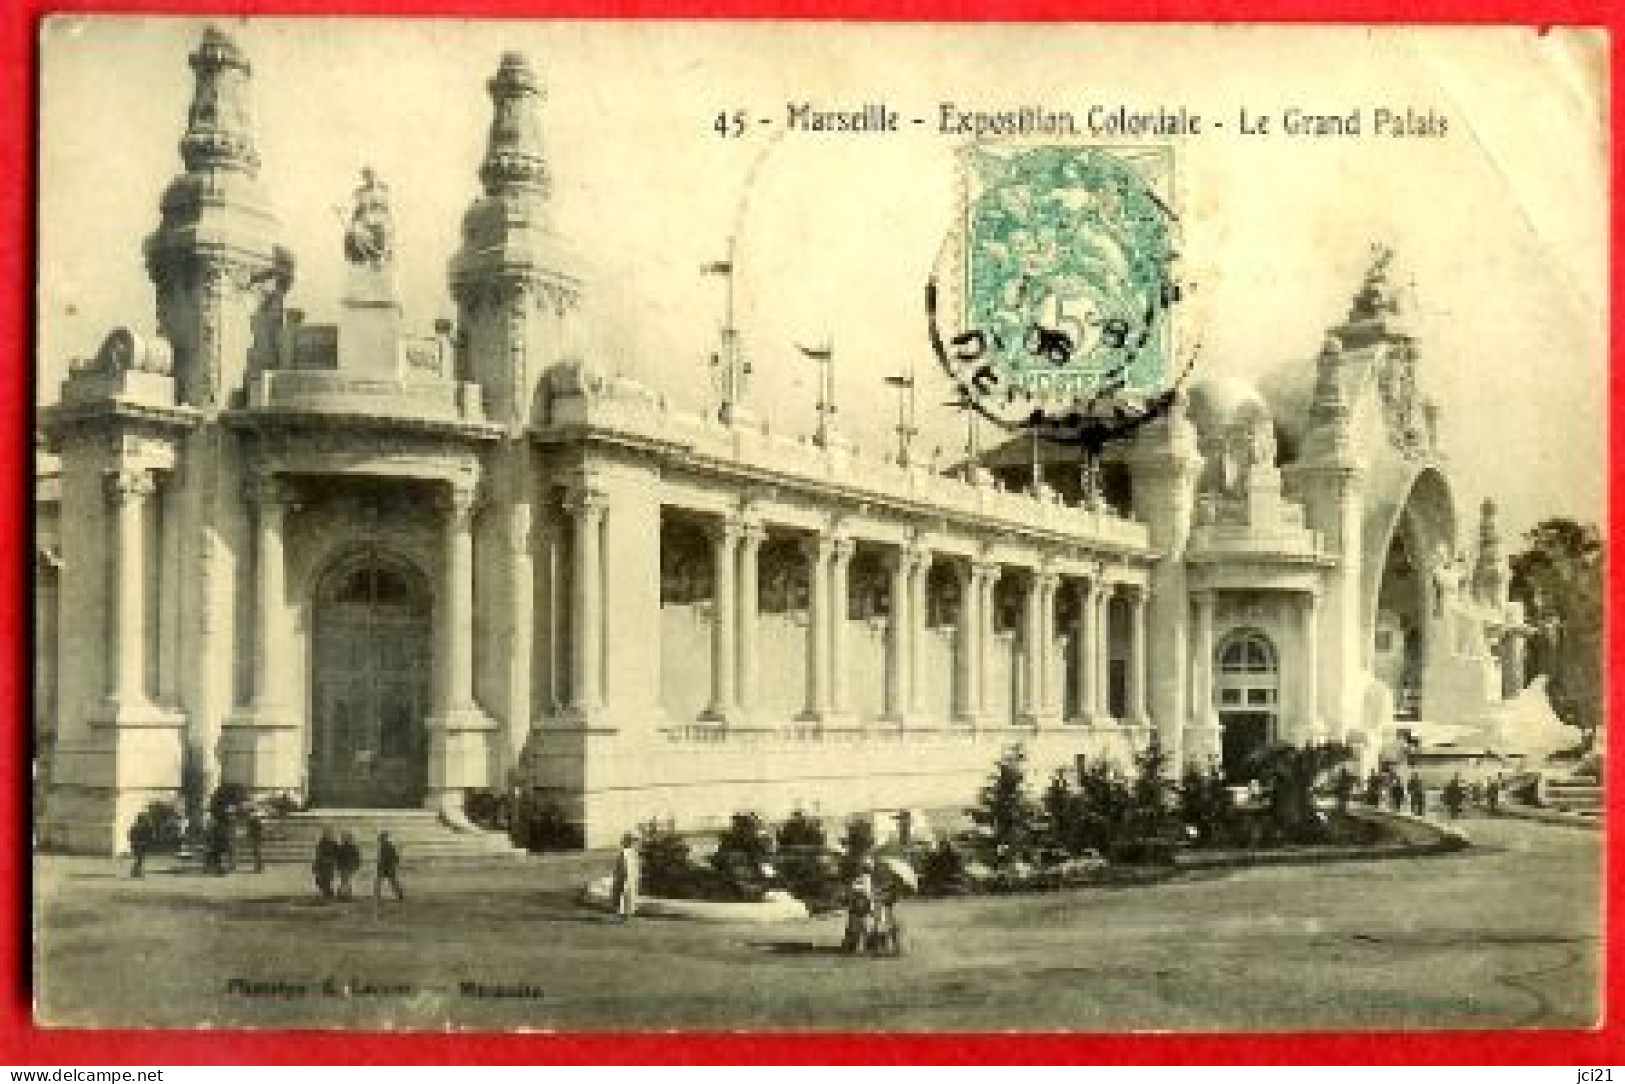 13 - MARSEILLE - EXPOSITION COLONIALE - LE GRAND PALAIS - CPA ANIMÉE (337)_CP70 - Koloniale Tentoonstelling 1906-1922